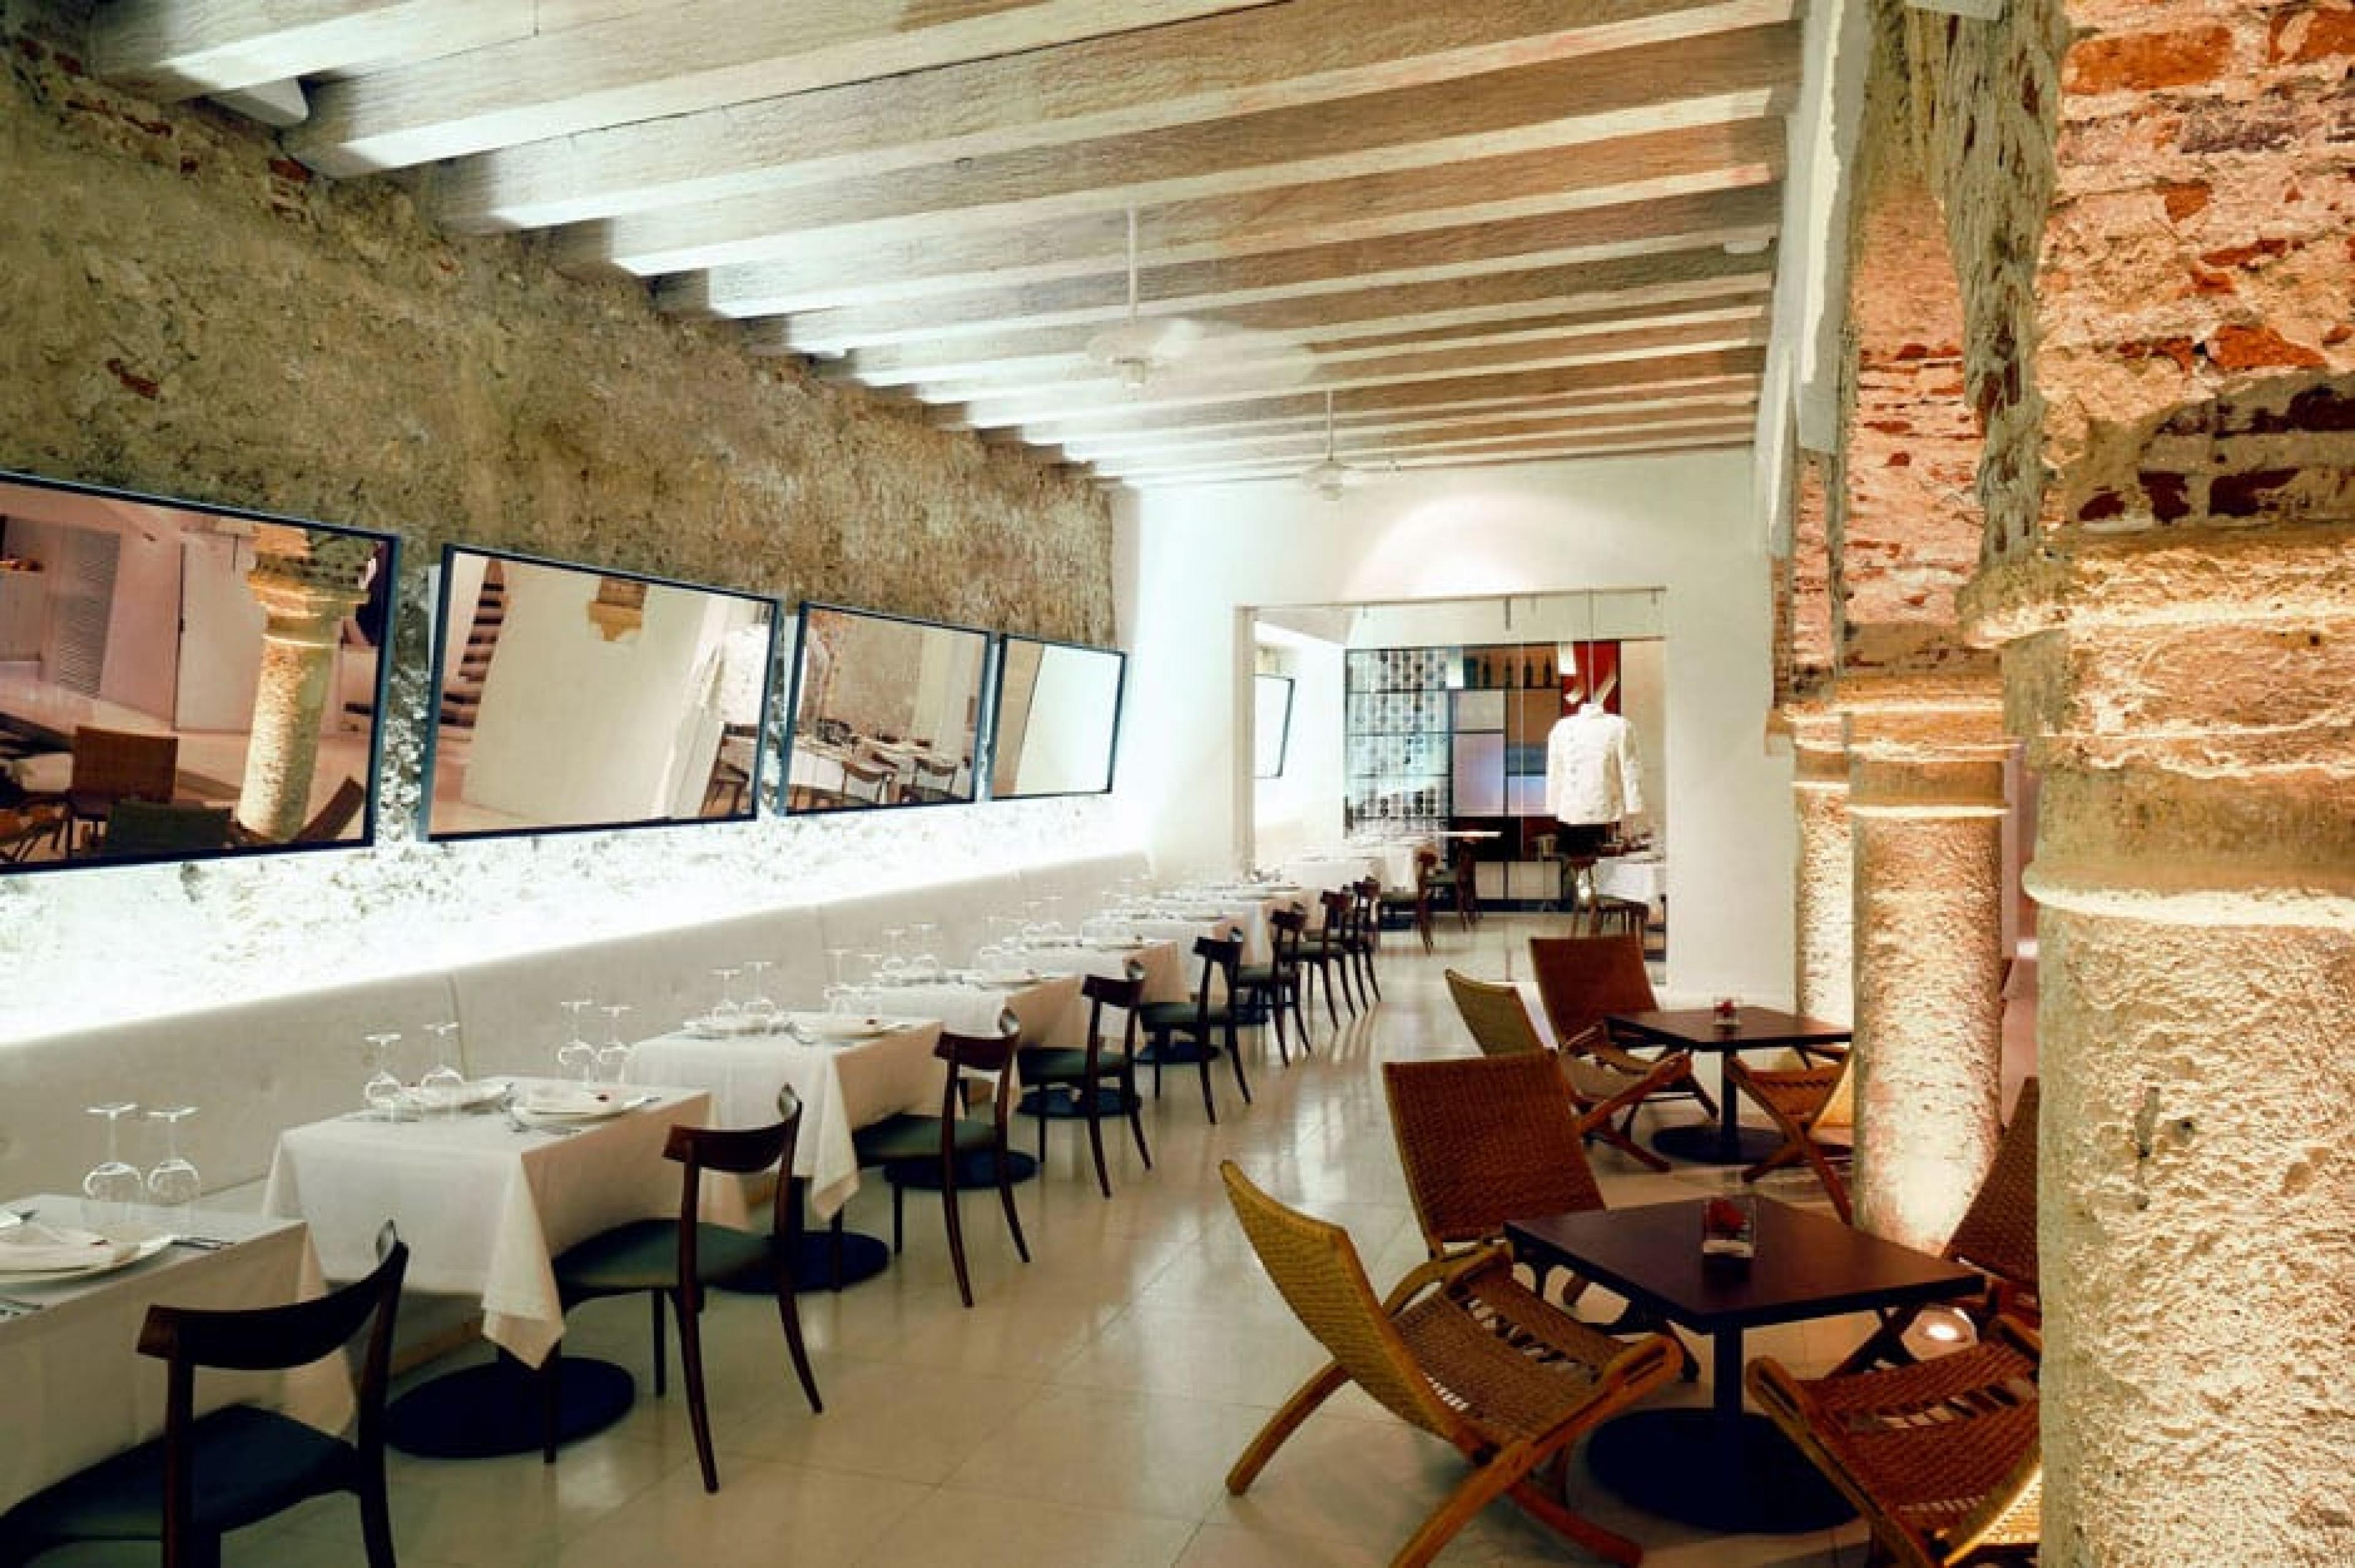 Dinning Area at Vera Restaurant Cartagena, Colombia